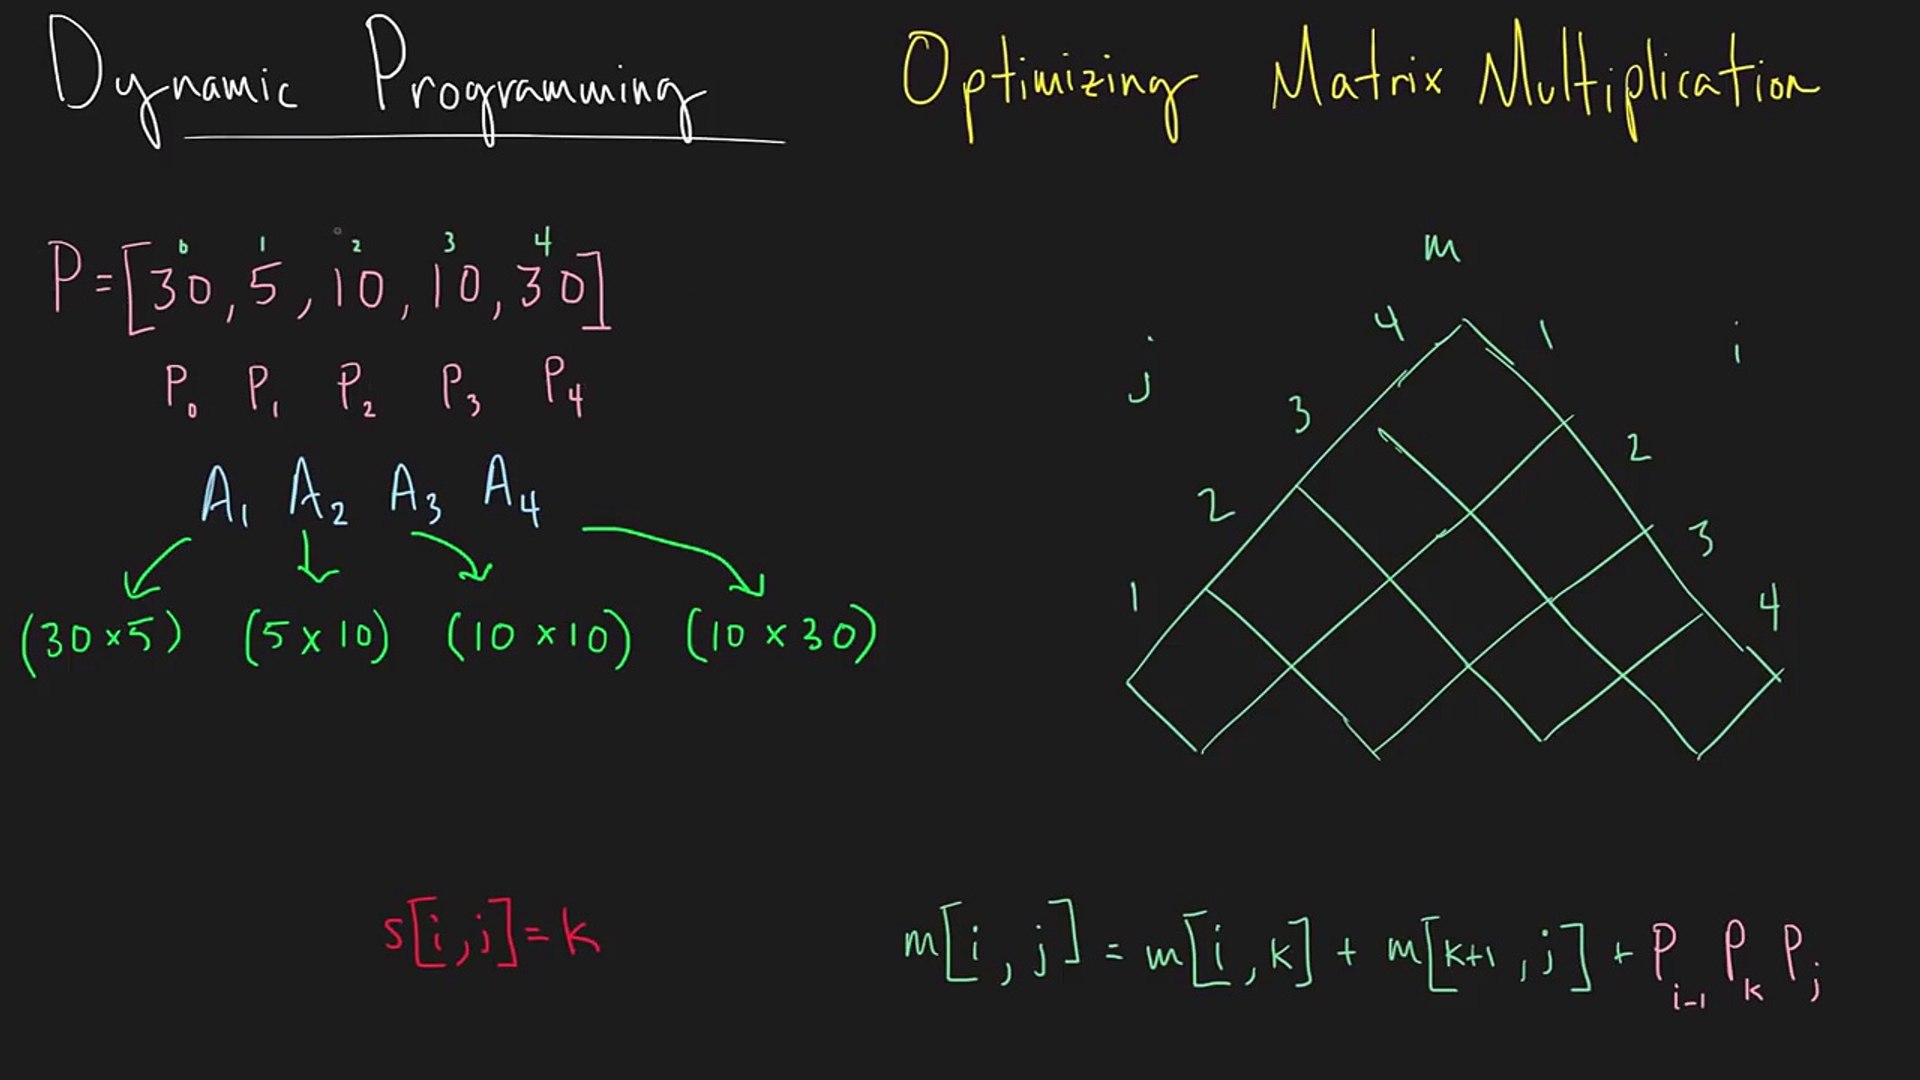 Dynamic Programming - Optimizing Matrix Multiplication